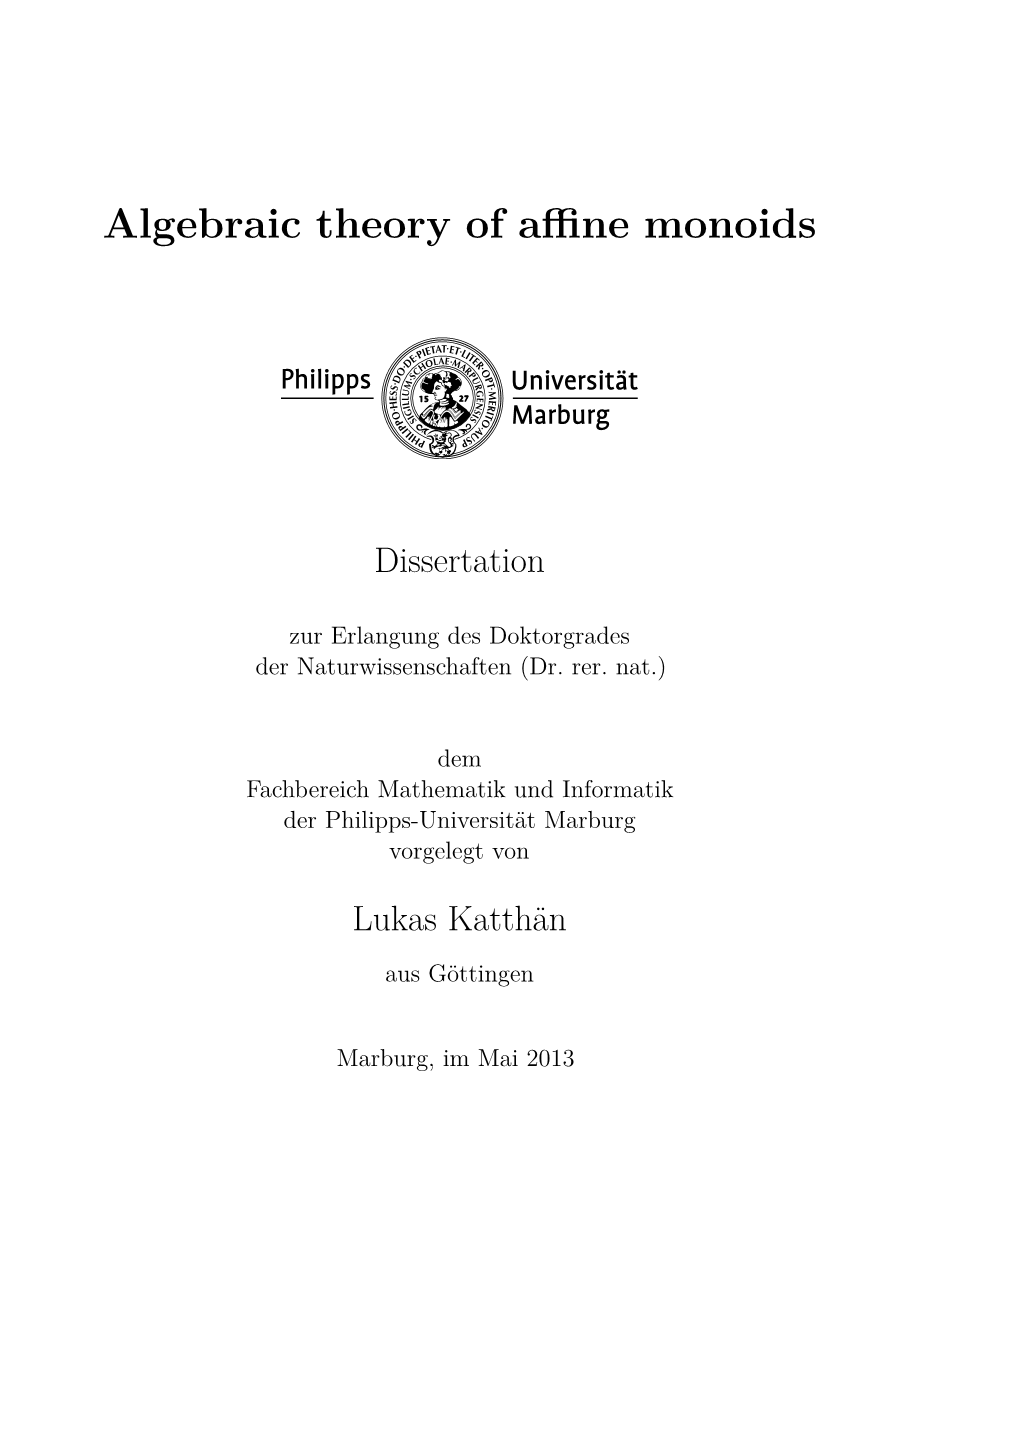 Algebraic Theory of Affine Monoids